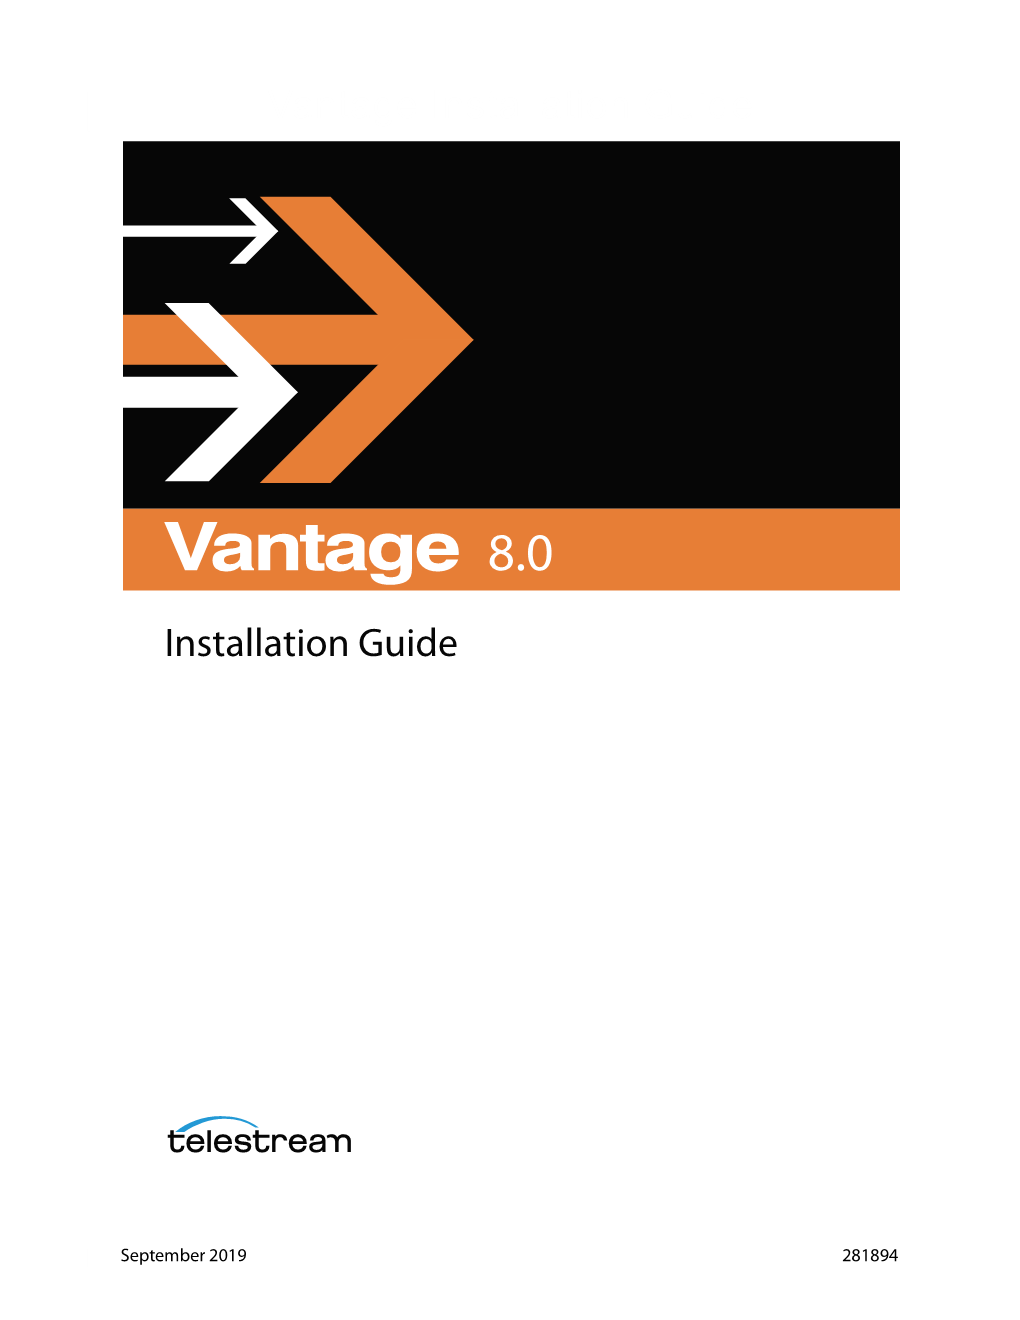 Vantage 8.0 UP1 Installation Guide